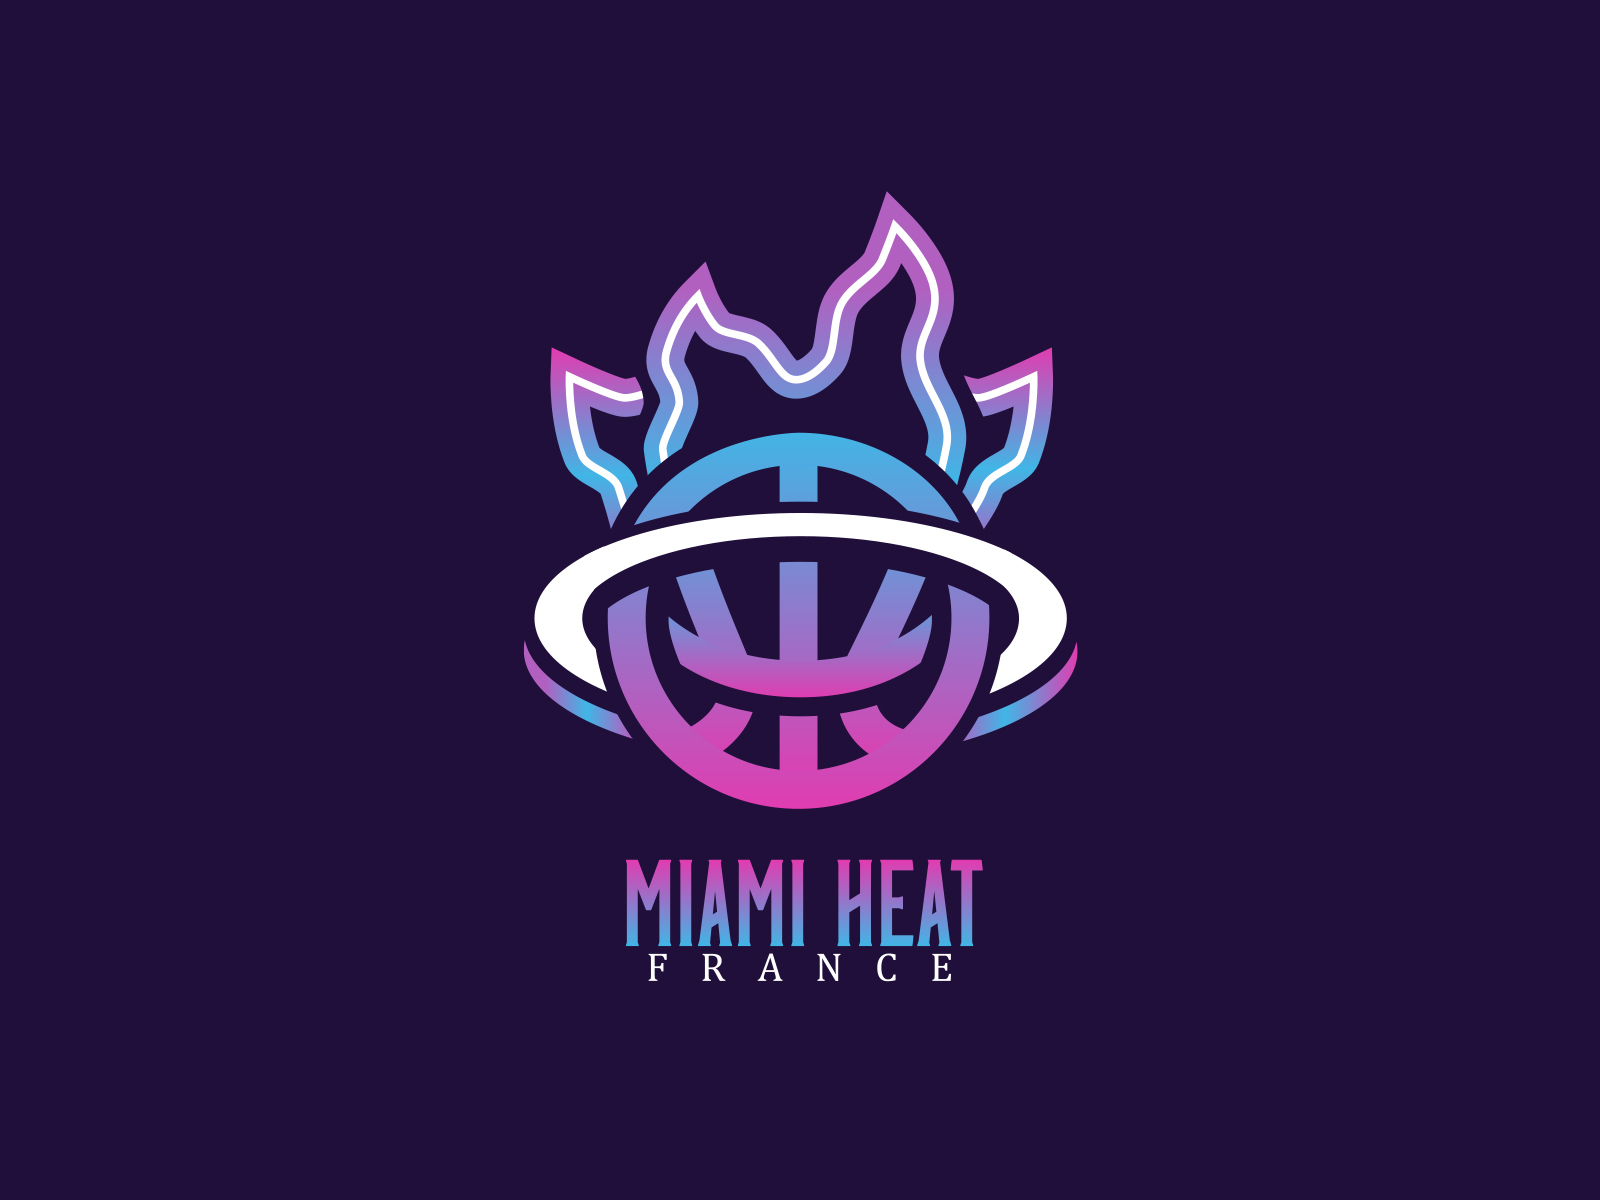 Random - Change Miami Heat Vice graphic to say Mega Powers